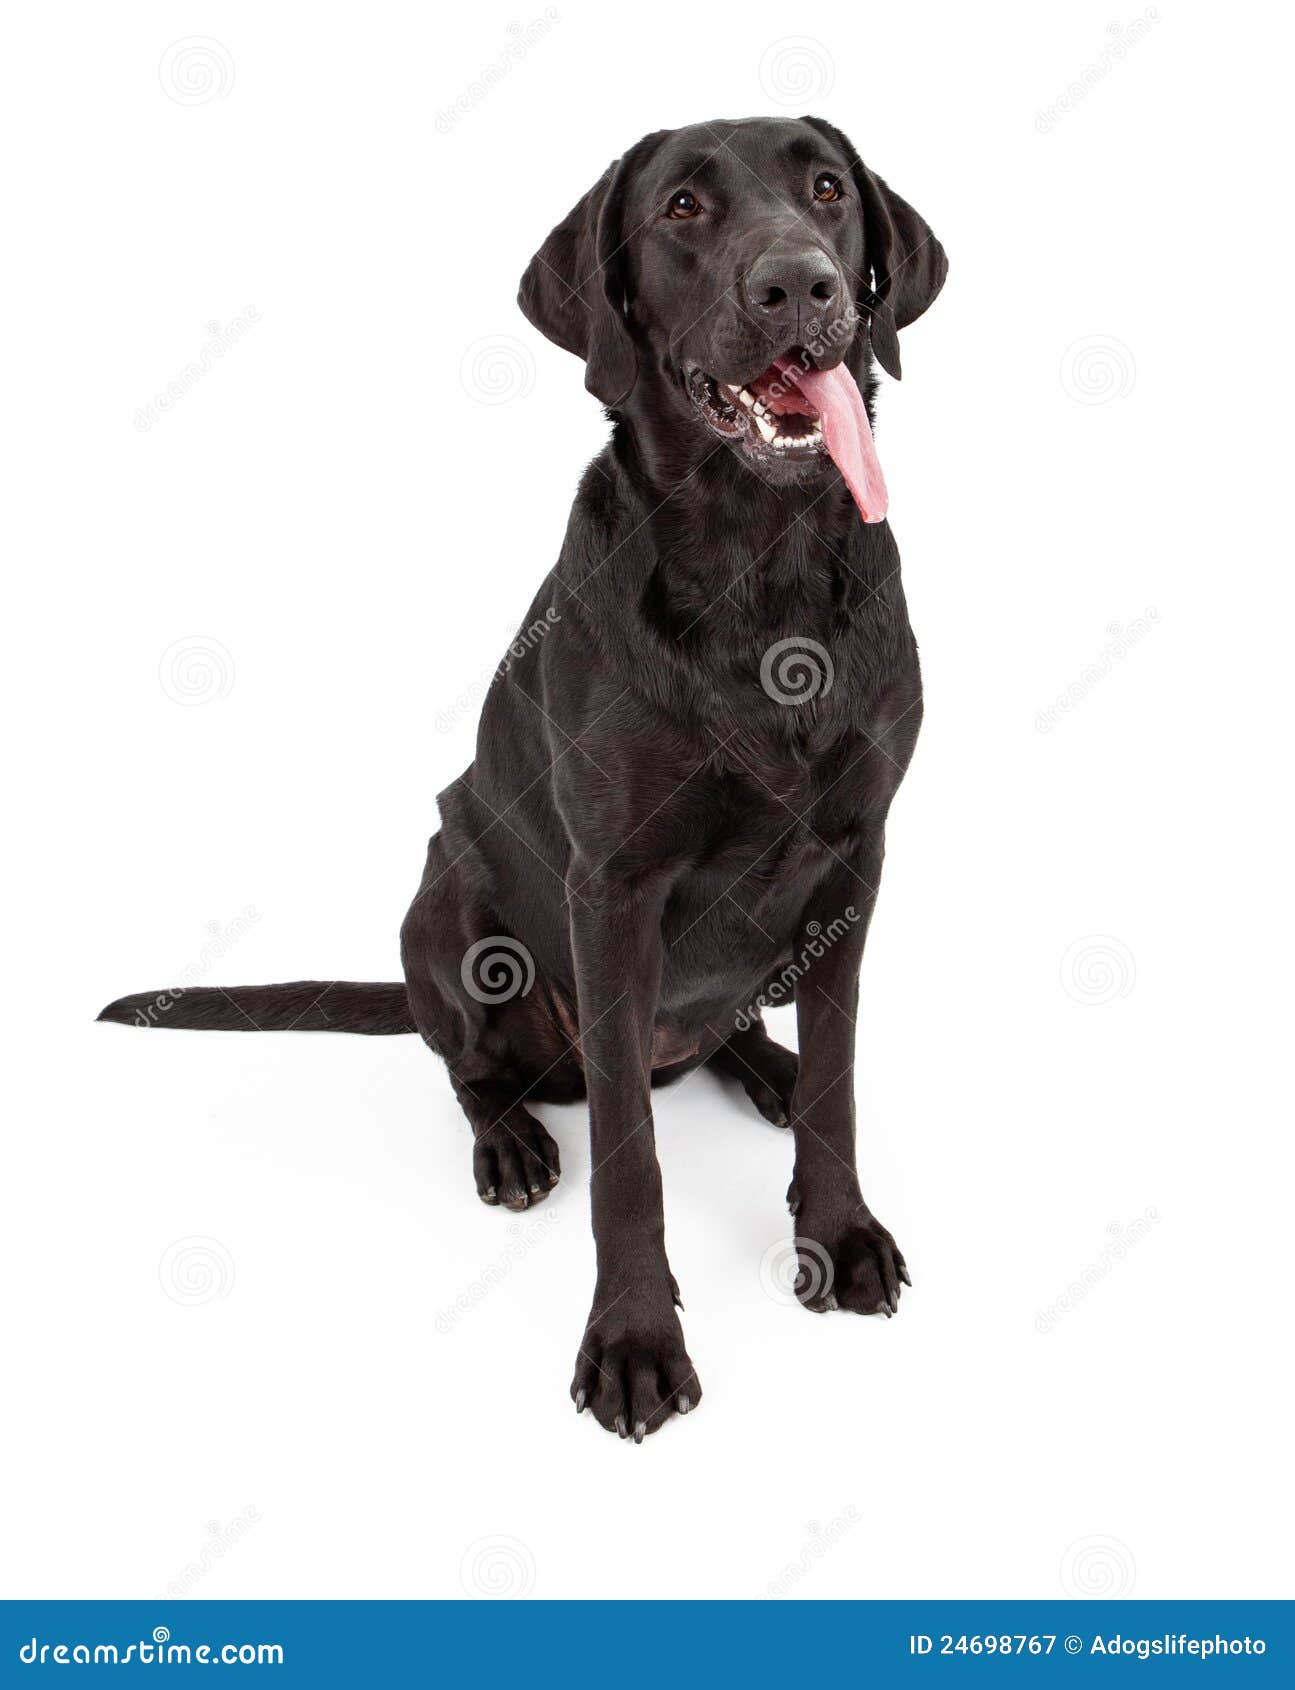  Free Stock Photography: Black Labrador Retriever Dog With Tongue Out